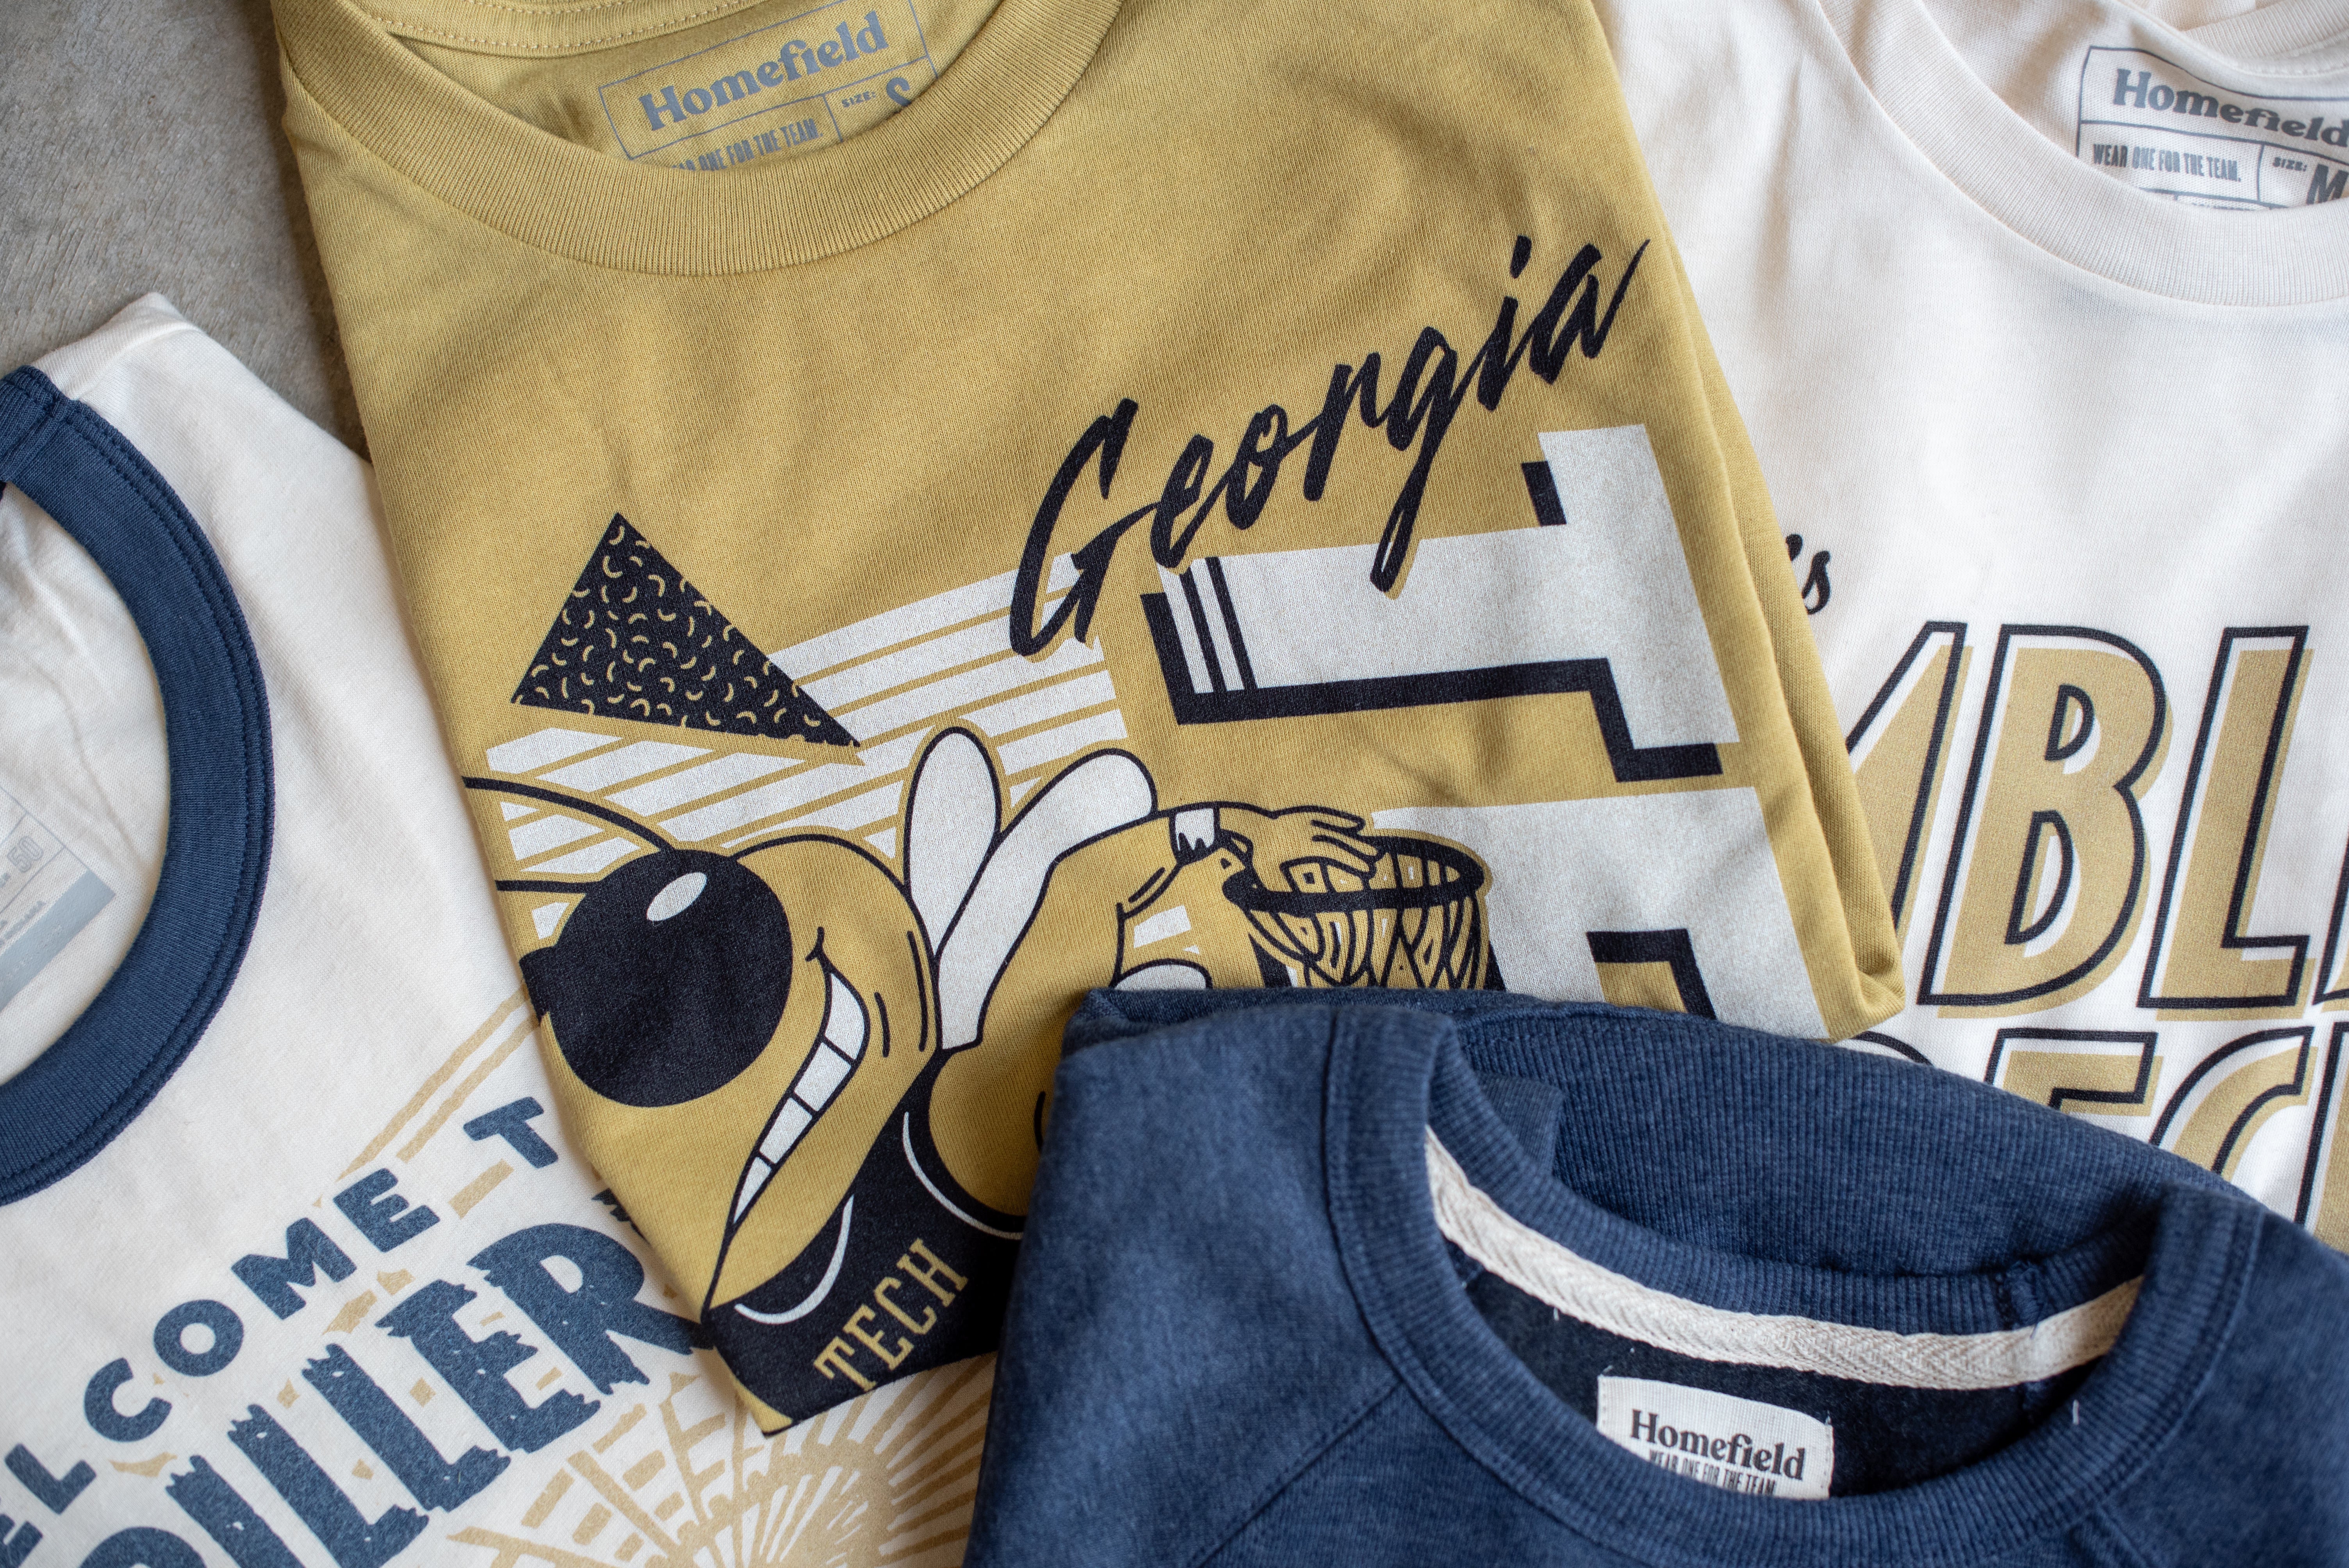 Lids UCLA Bruins Homefield Years Vintage T-Shirt - White